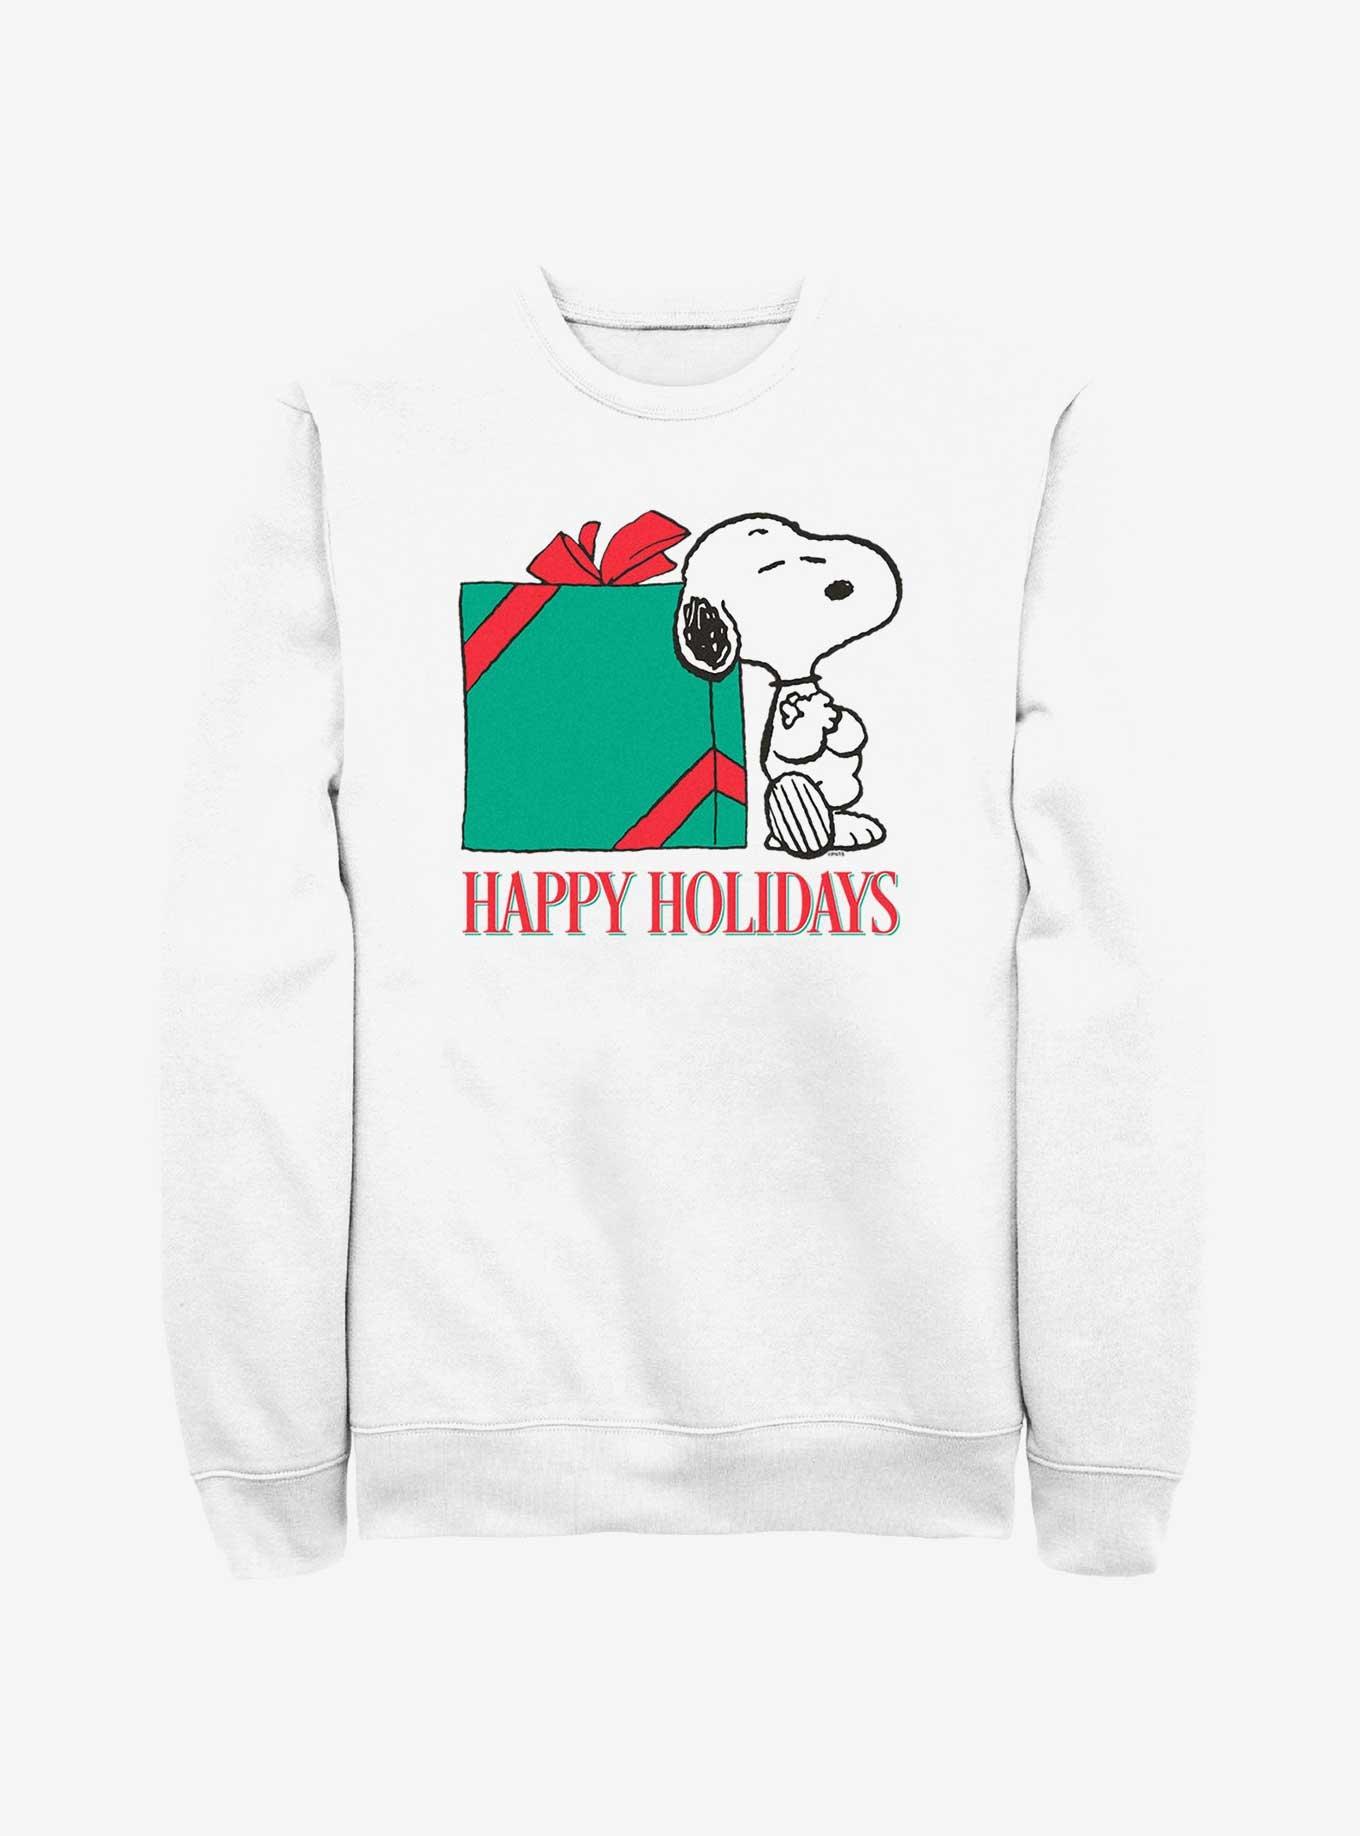 Hot Topic Peanuts Snoopy Happy Holidays Sweatshirt